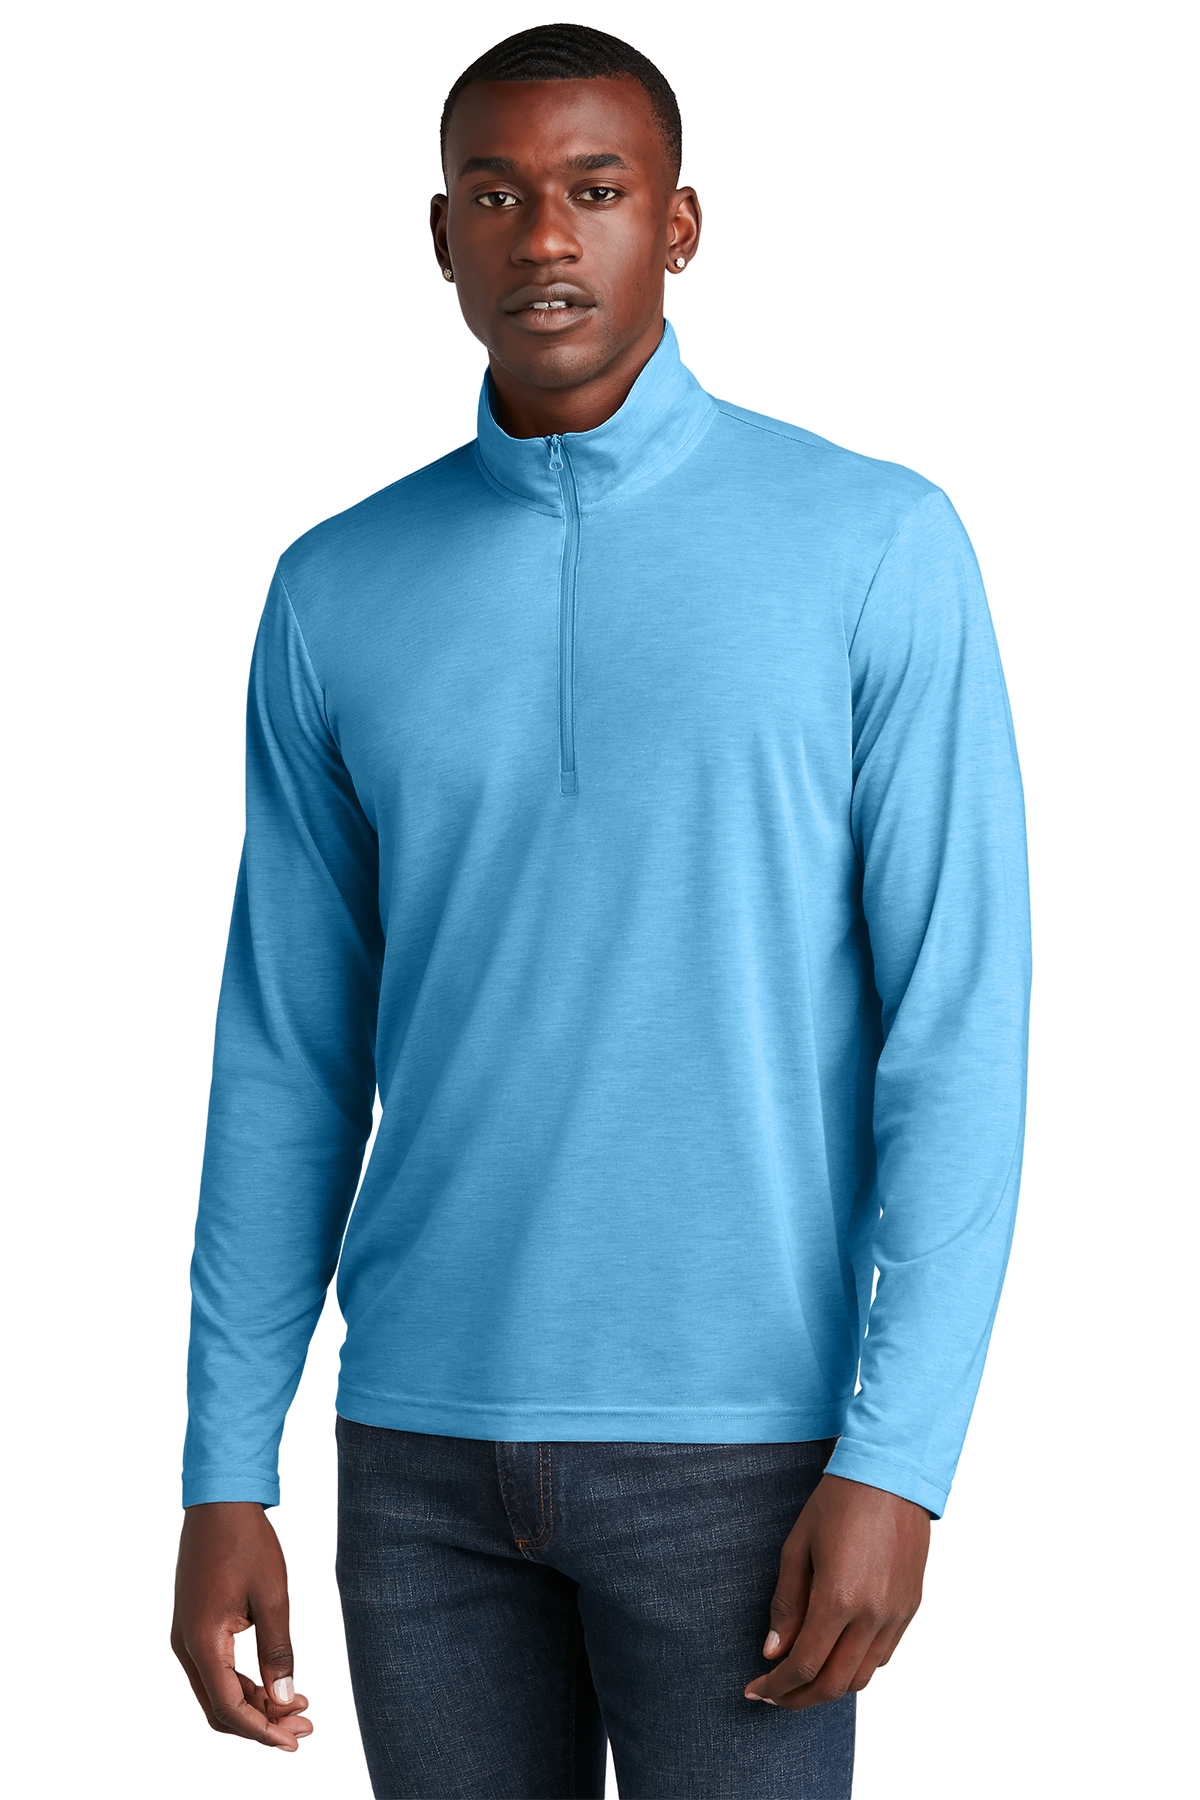 Sport-Tek PosiCharge Tri-Blend Wicking 1/4-Zip Pullover | Product |  Sport-Tek | T-Shirts